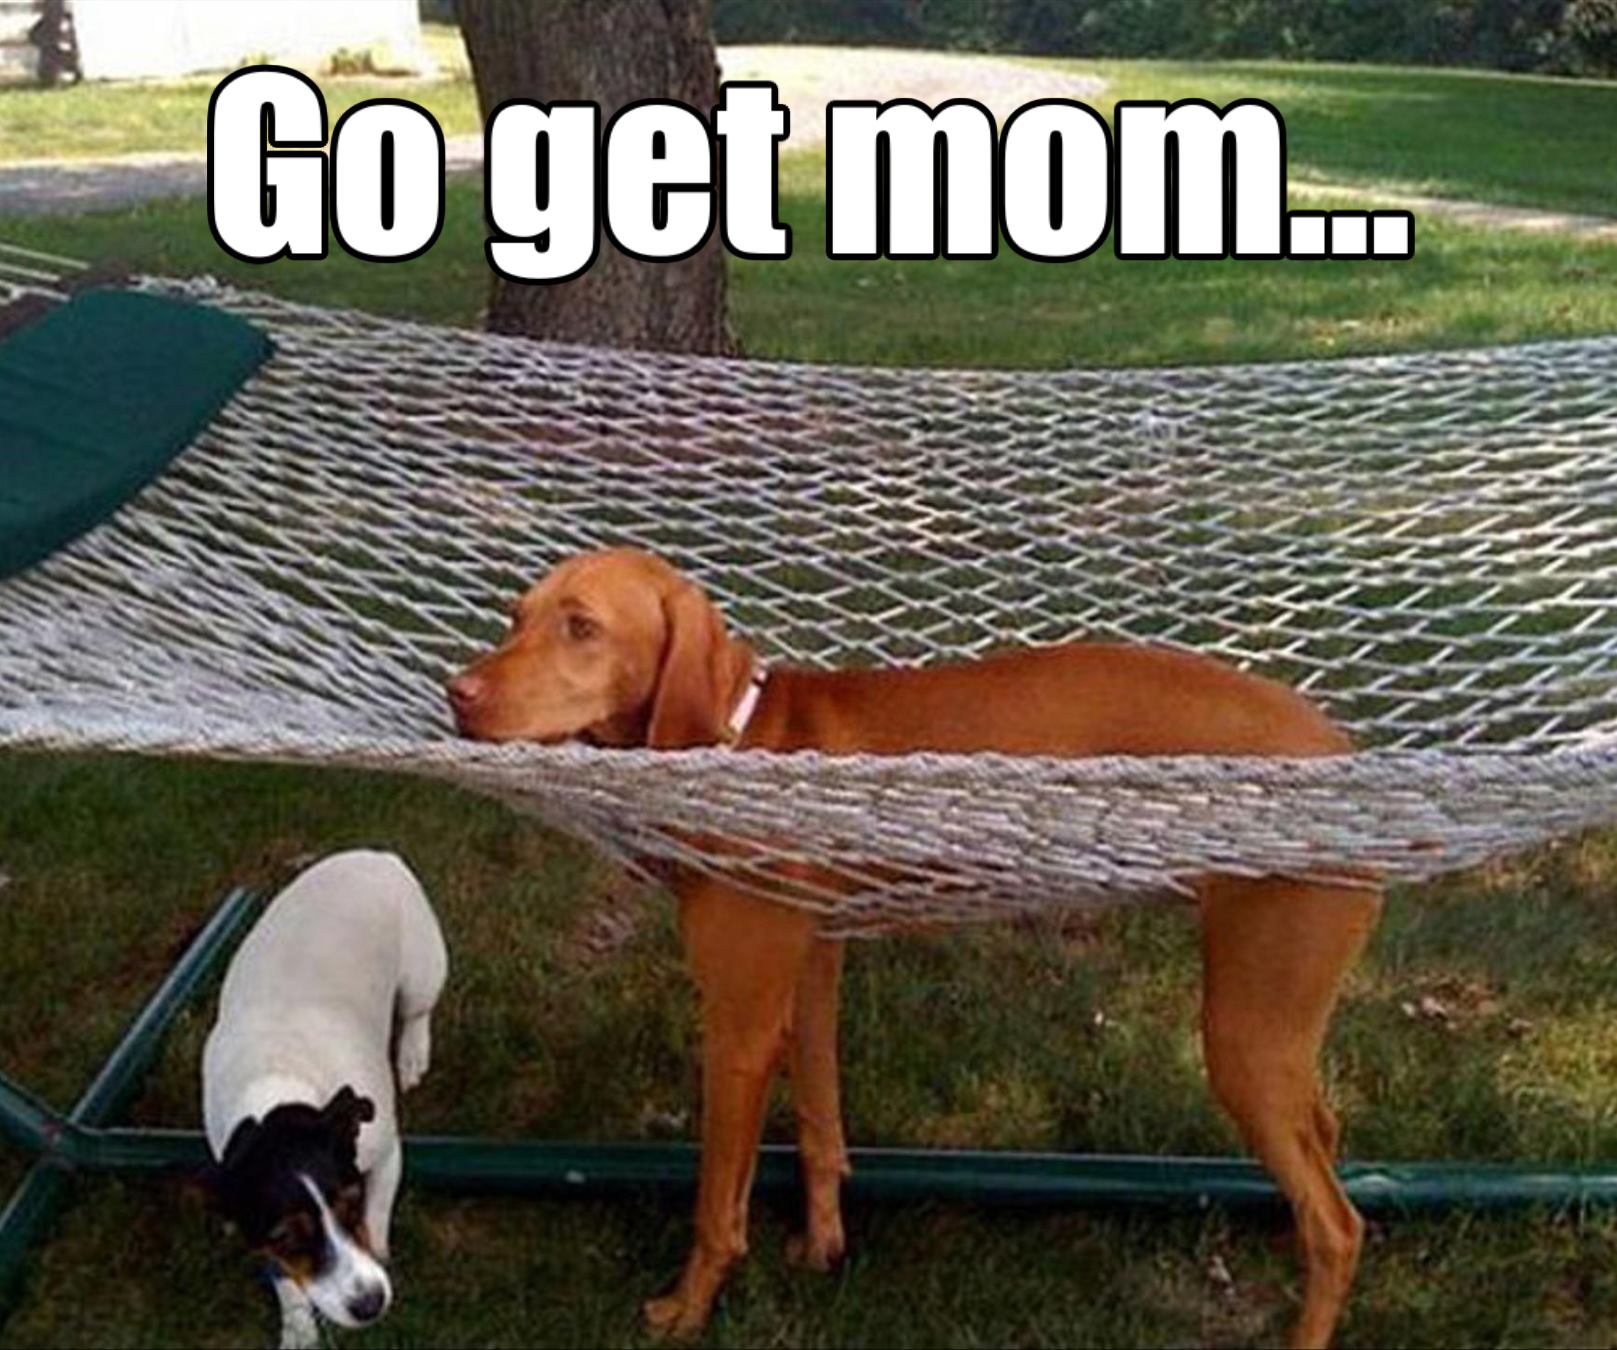 struggling dog - Go get mom...